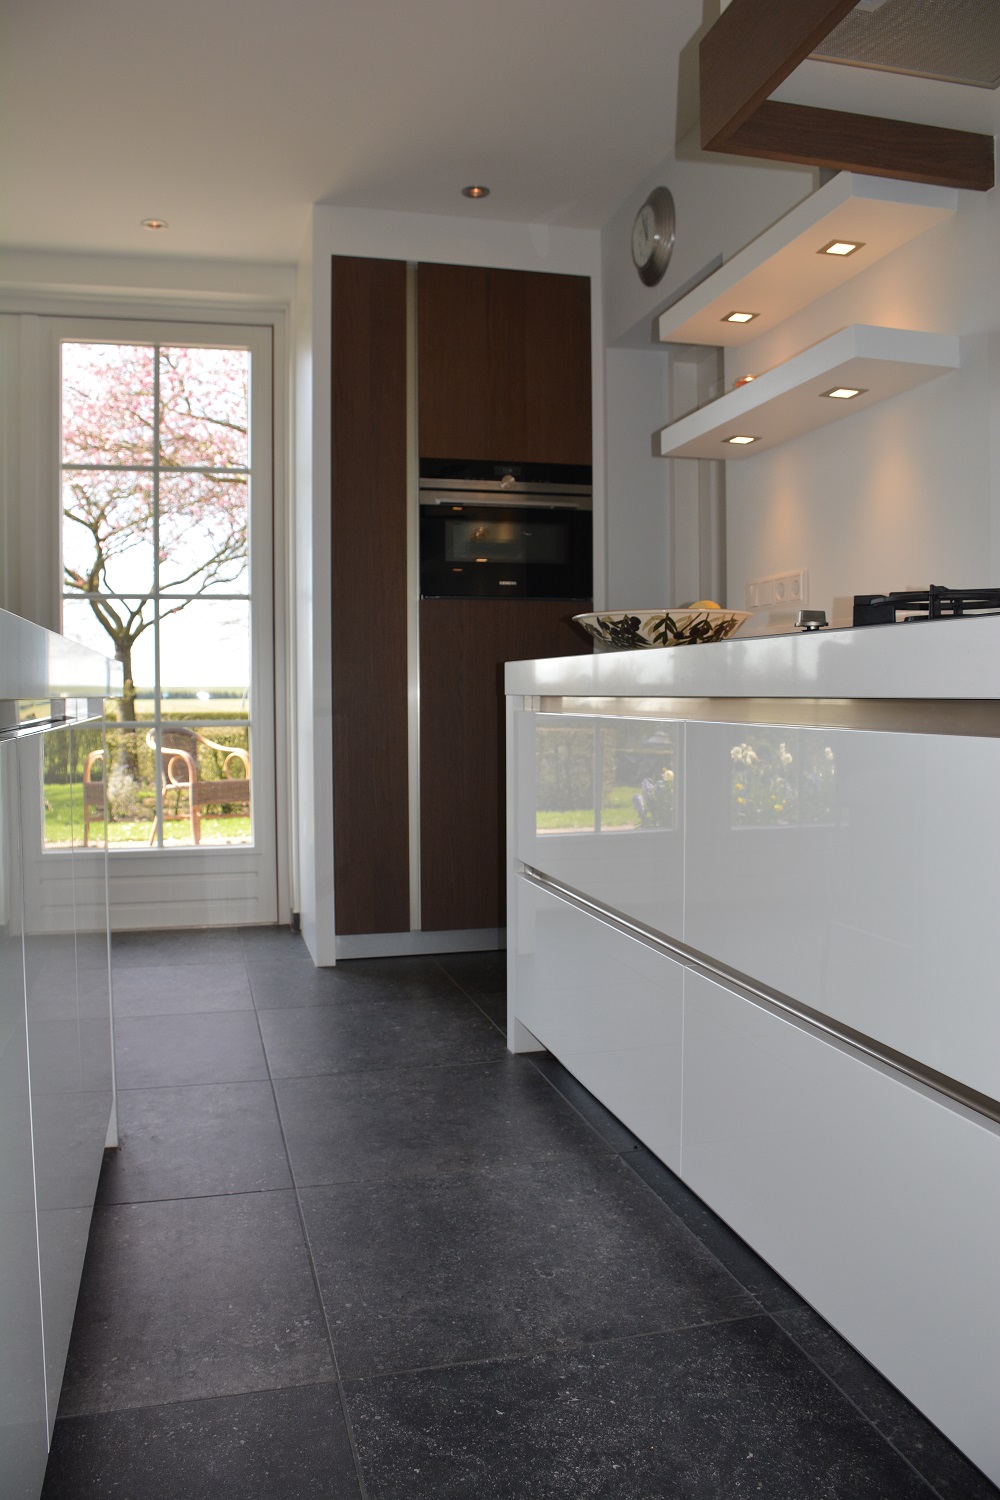 Fam van  Gorsel - Kruiningen - design keuken-image-5